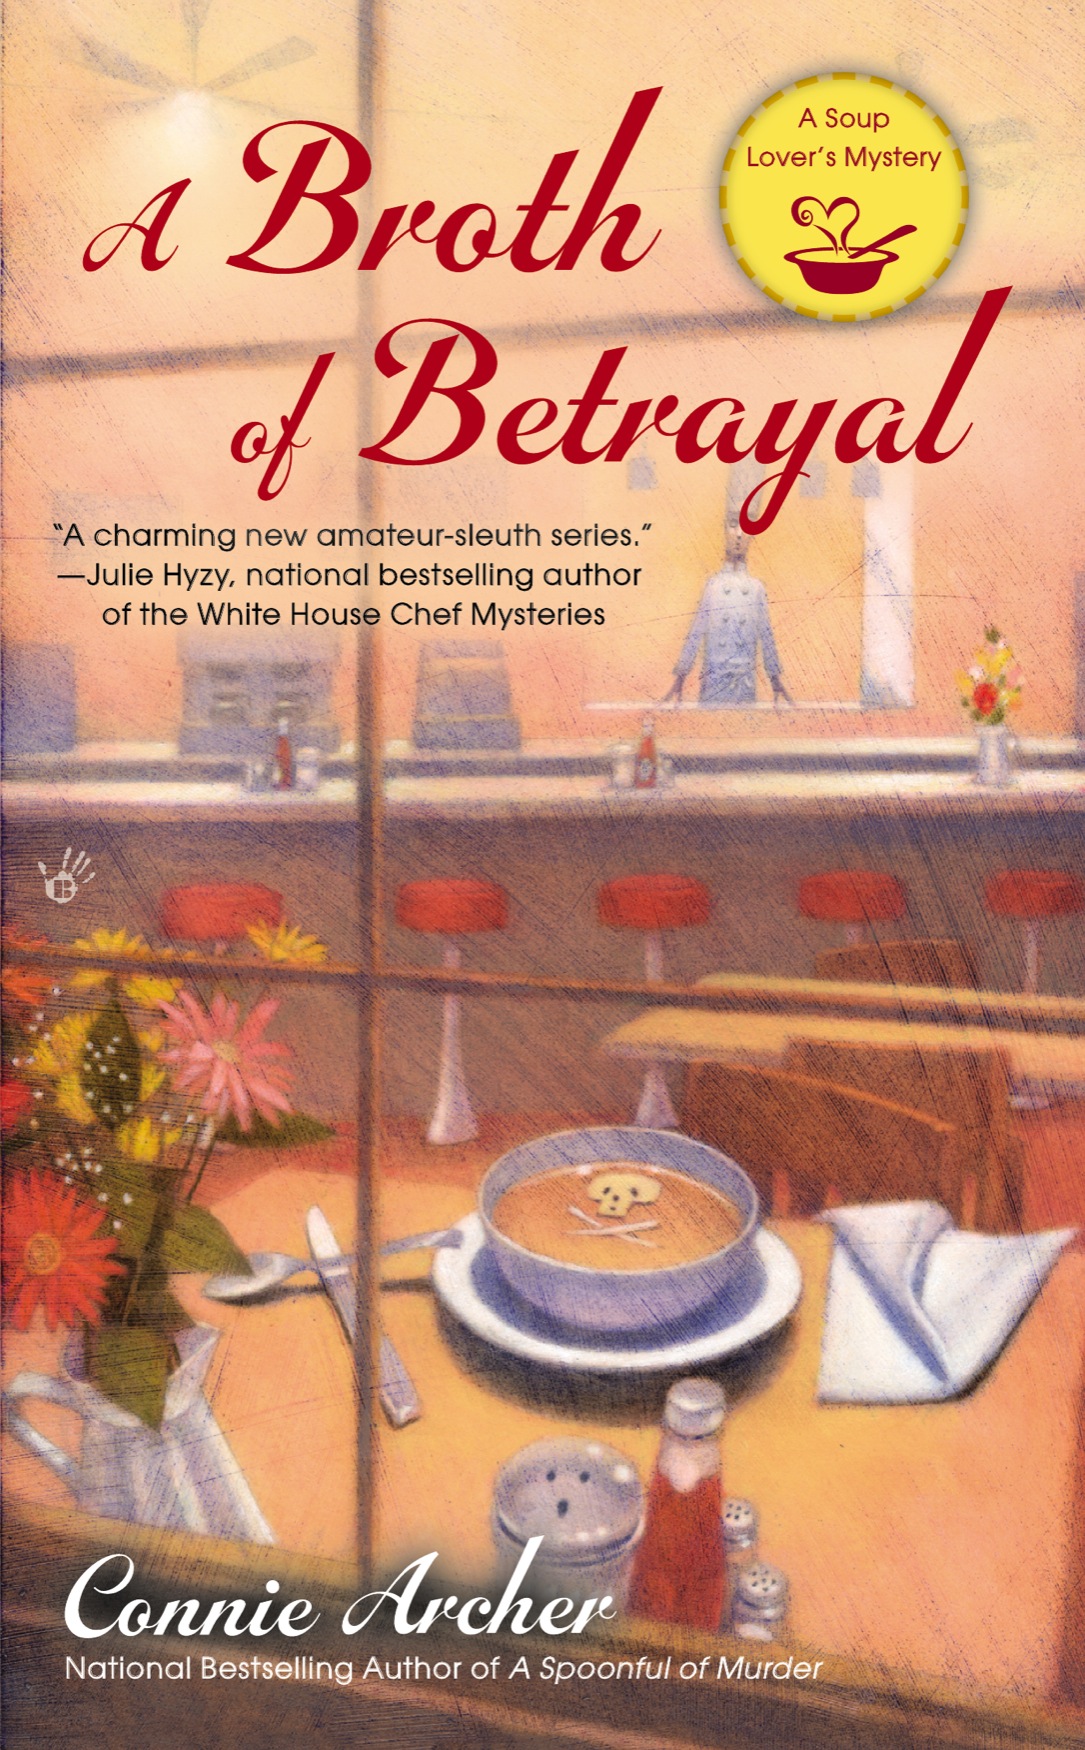 A Broth of Betrayal (2013) by Connie Archer